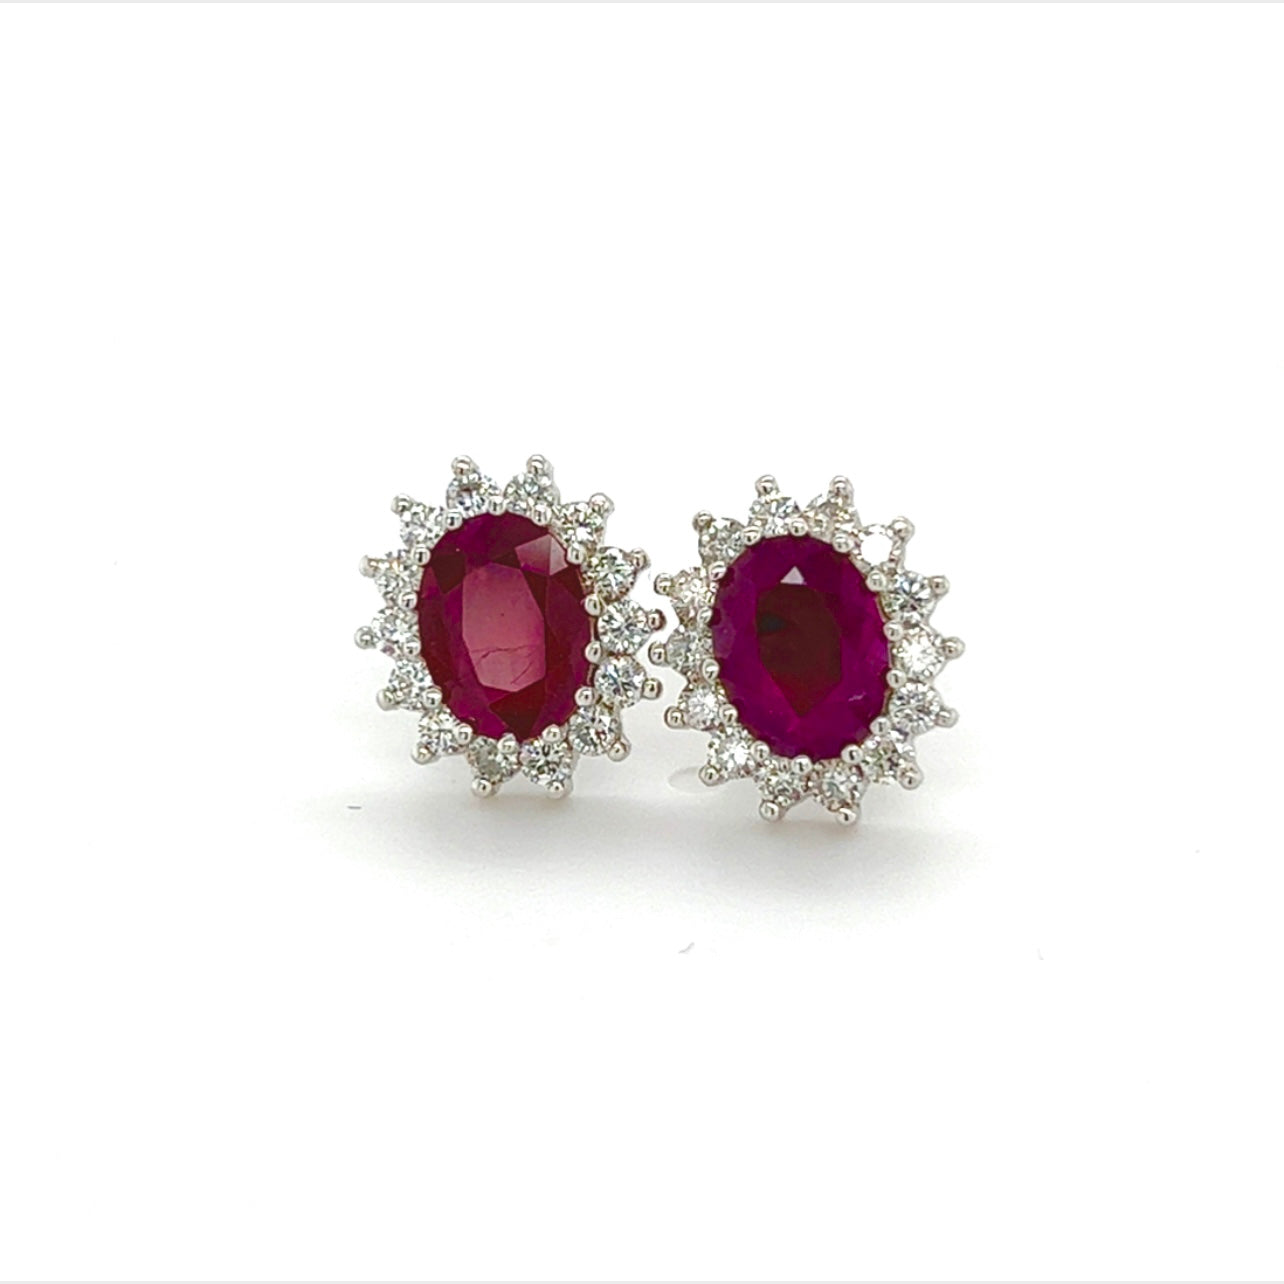 Natural Ruby Diamond Earrings 14k Gold 4.04 TCW Certified $5,250 215094